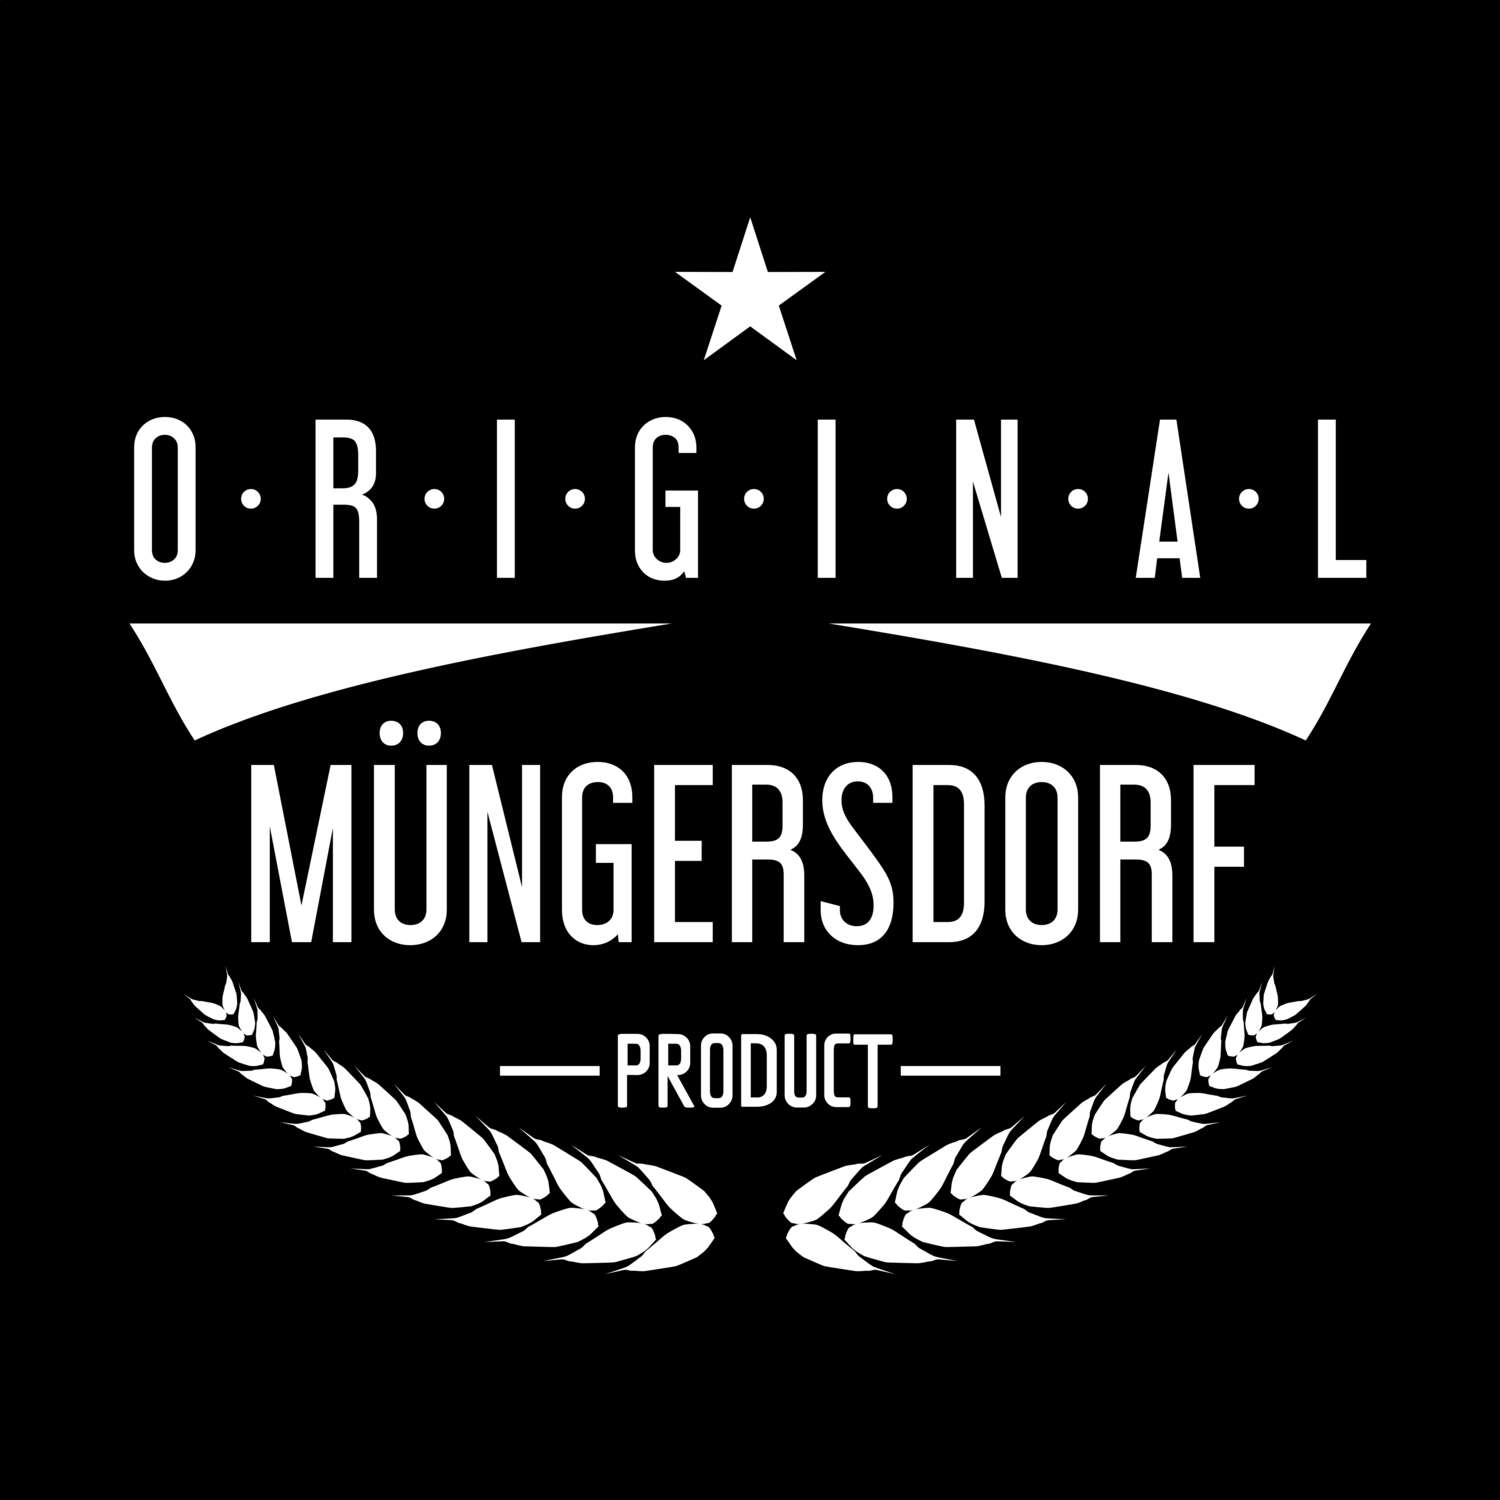 Müngersdorf T-Shirt »Original Product«